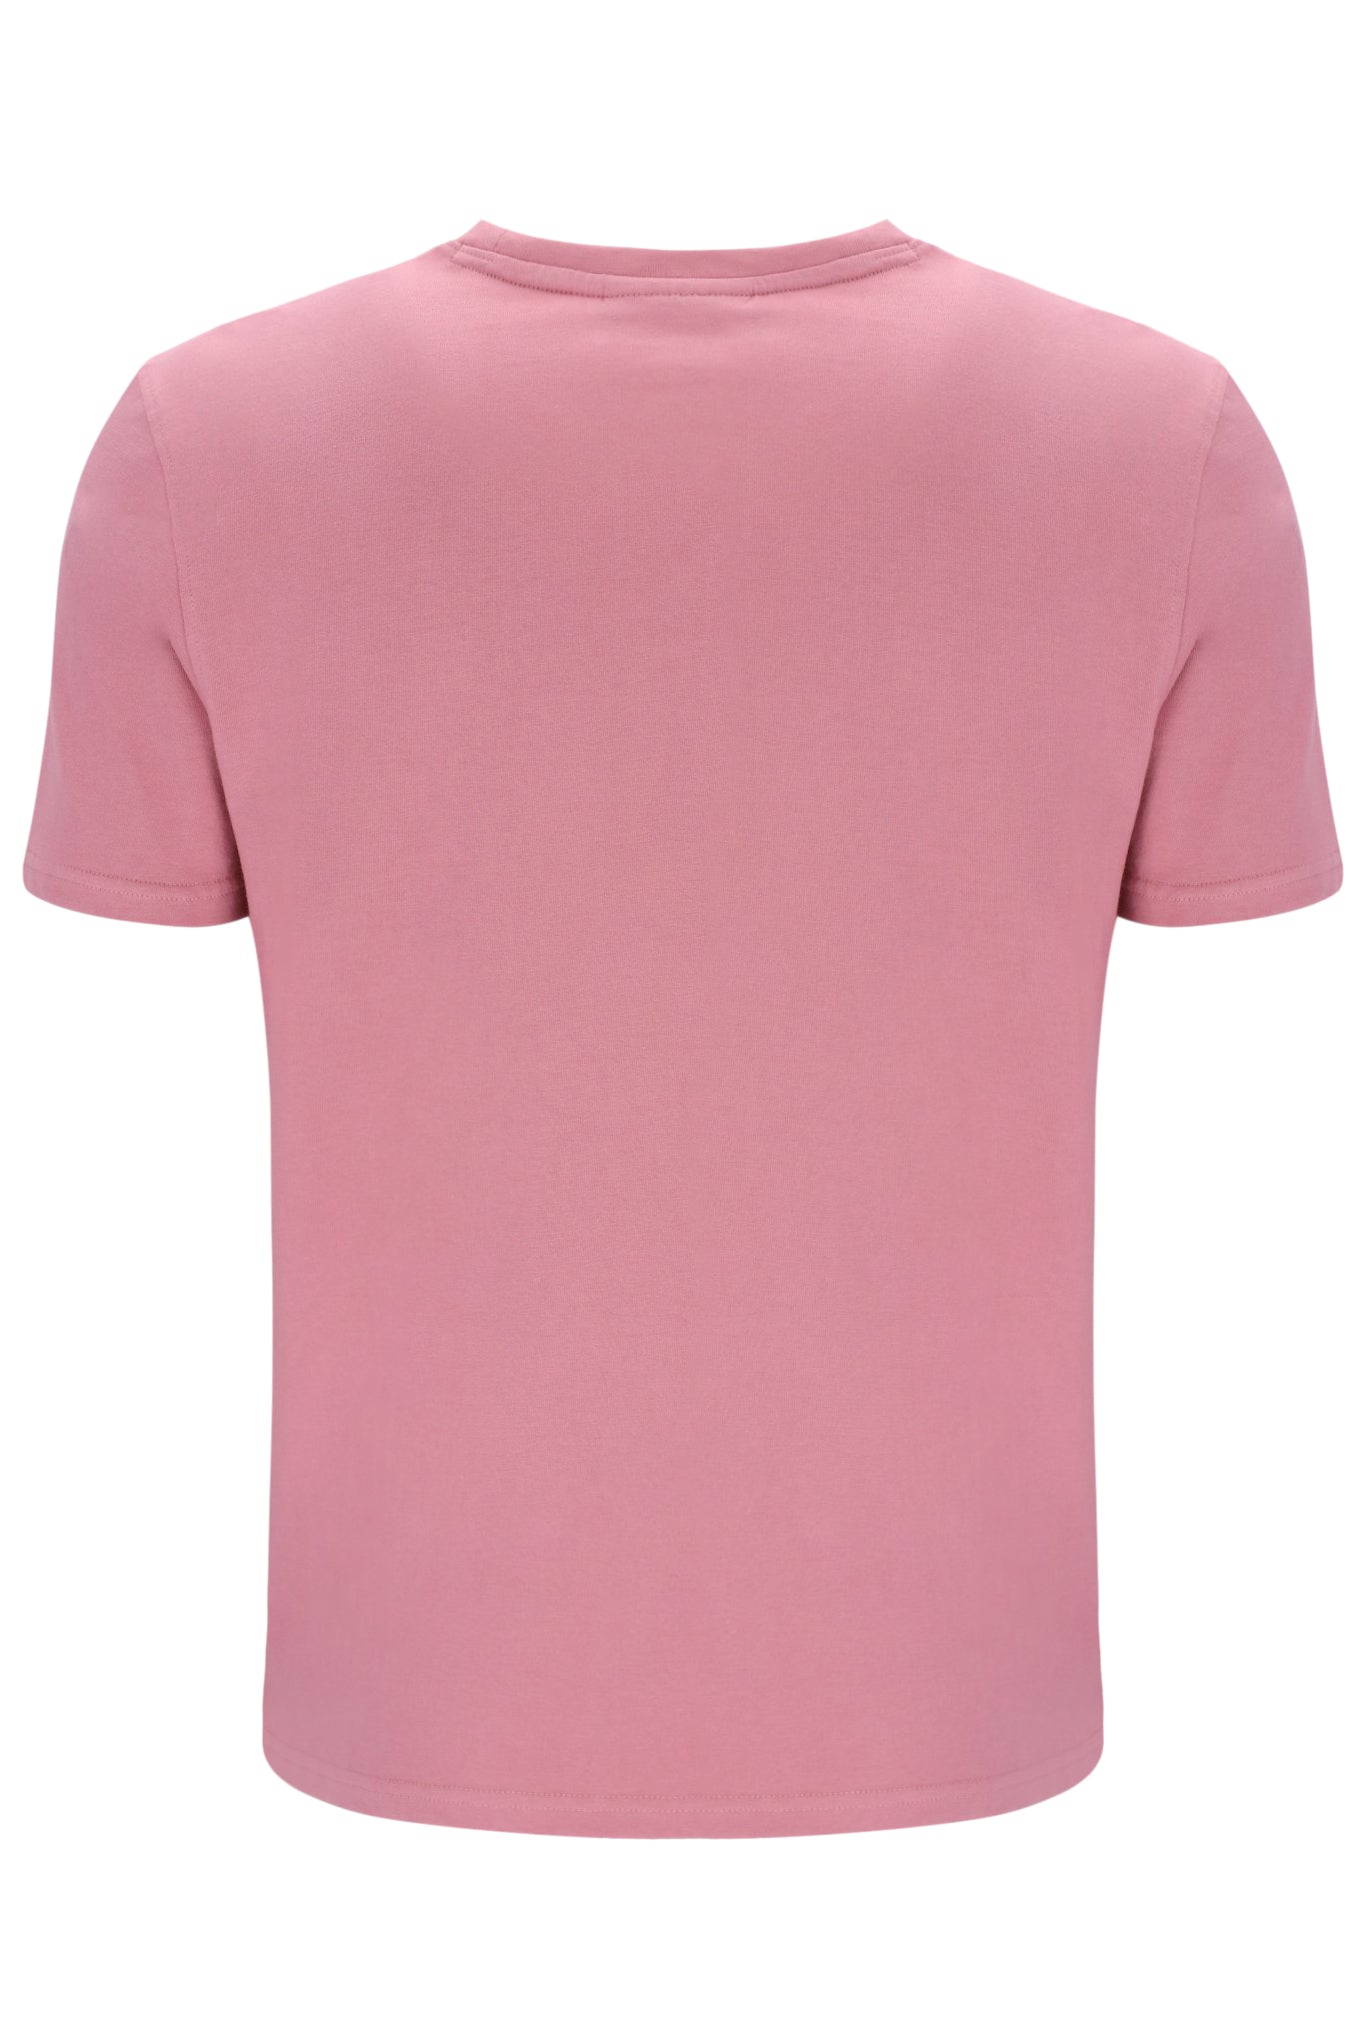 FILA Sunny Essential T-Shirt - Foxglove